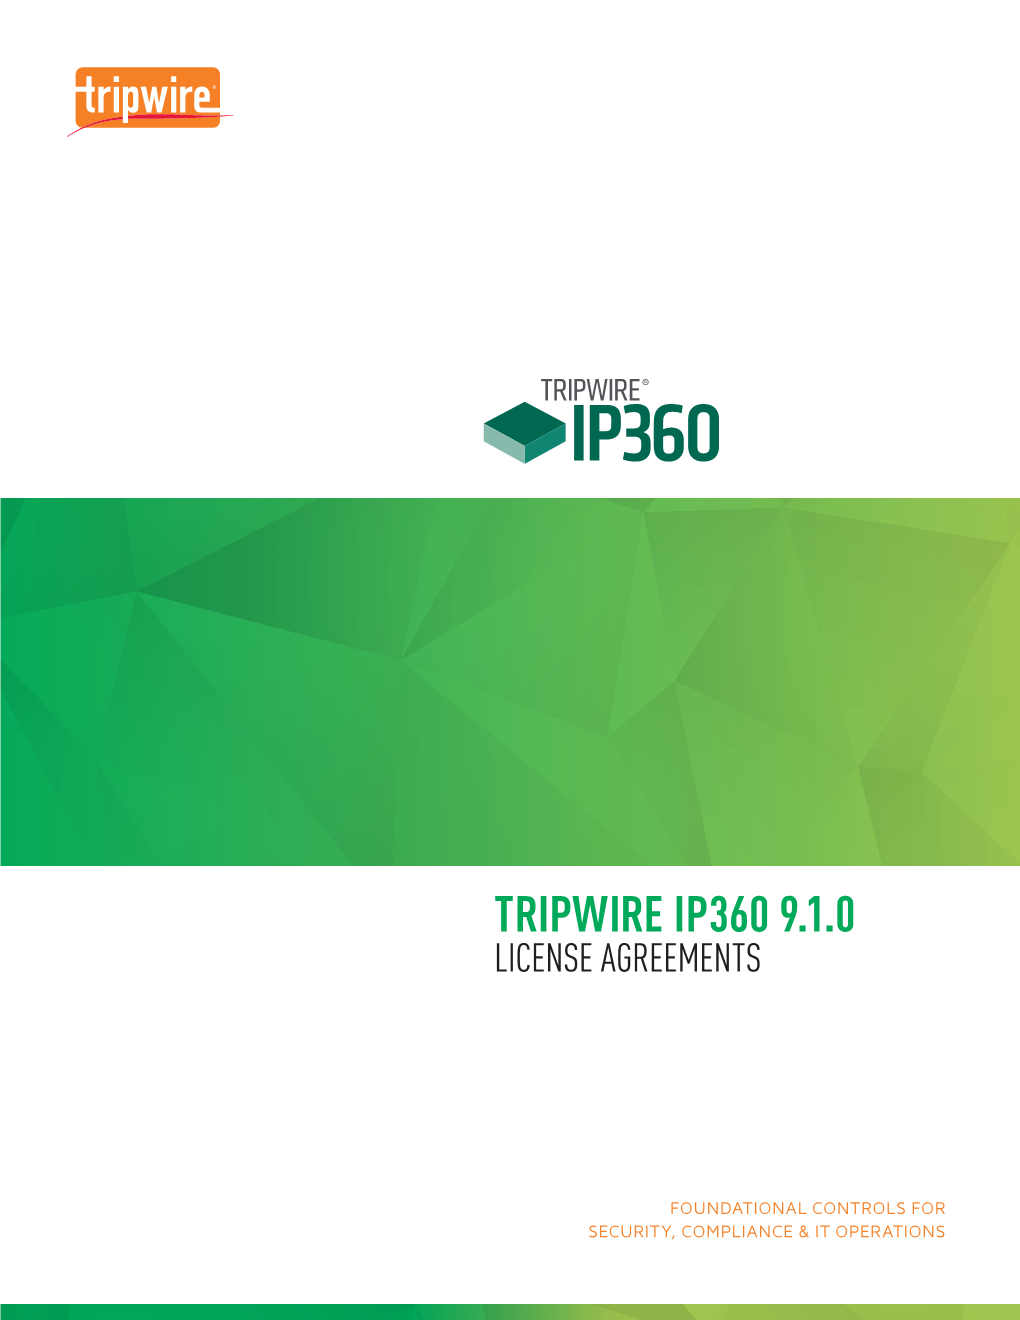 Tripwire Ip360 9.1.0 License Agreements